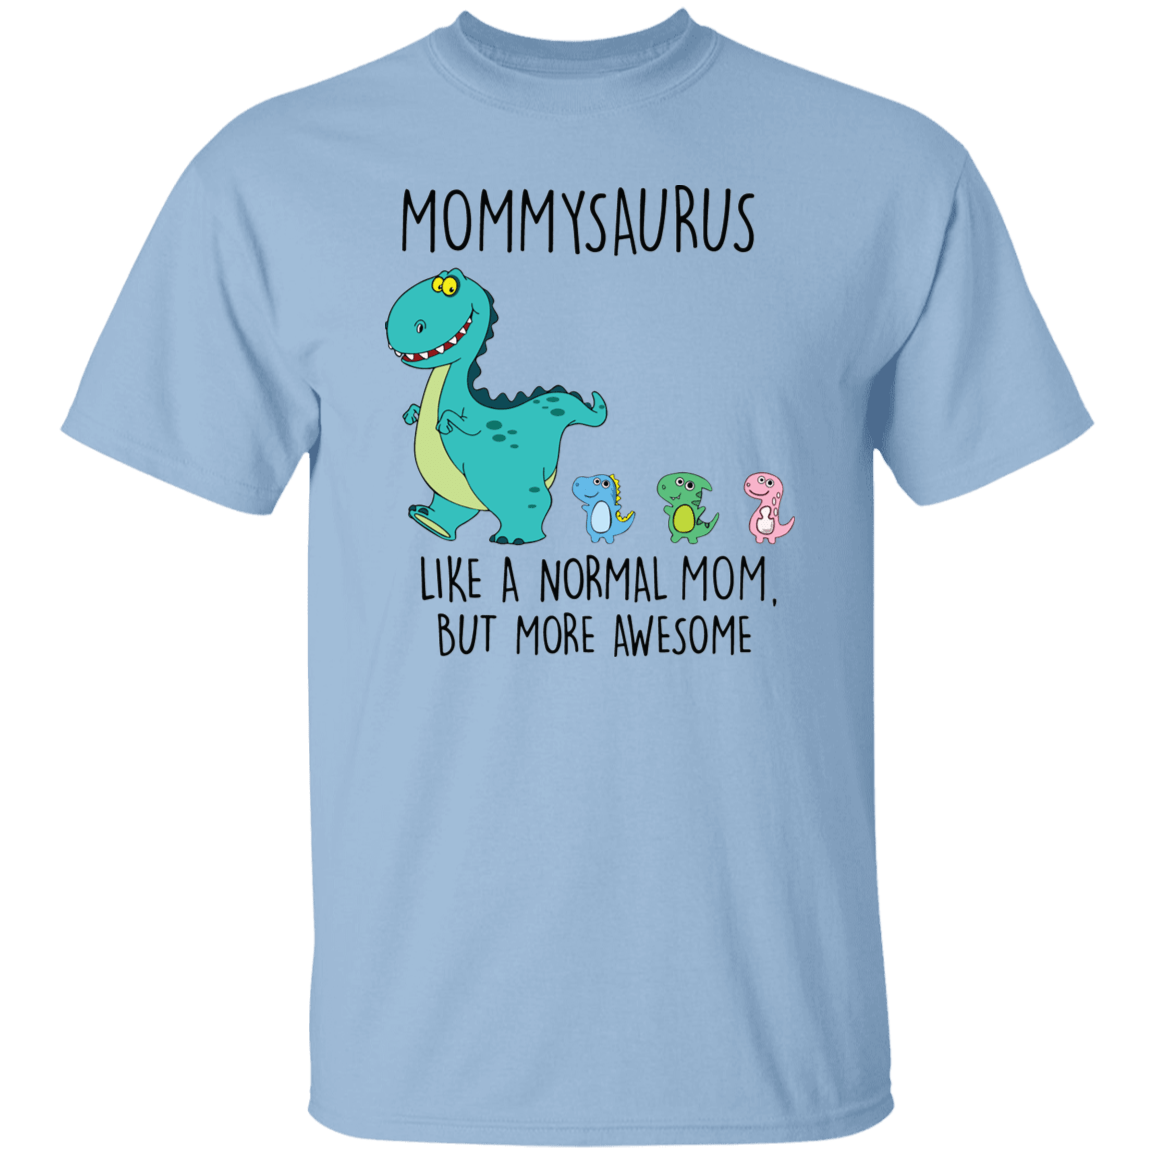 Mommysaurus T-Shirt